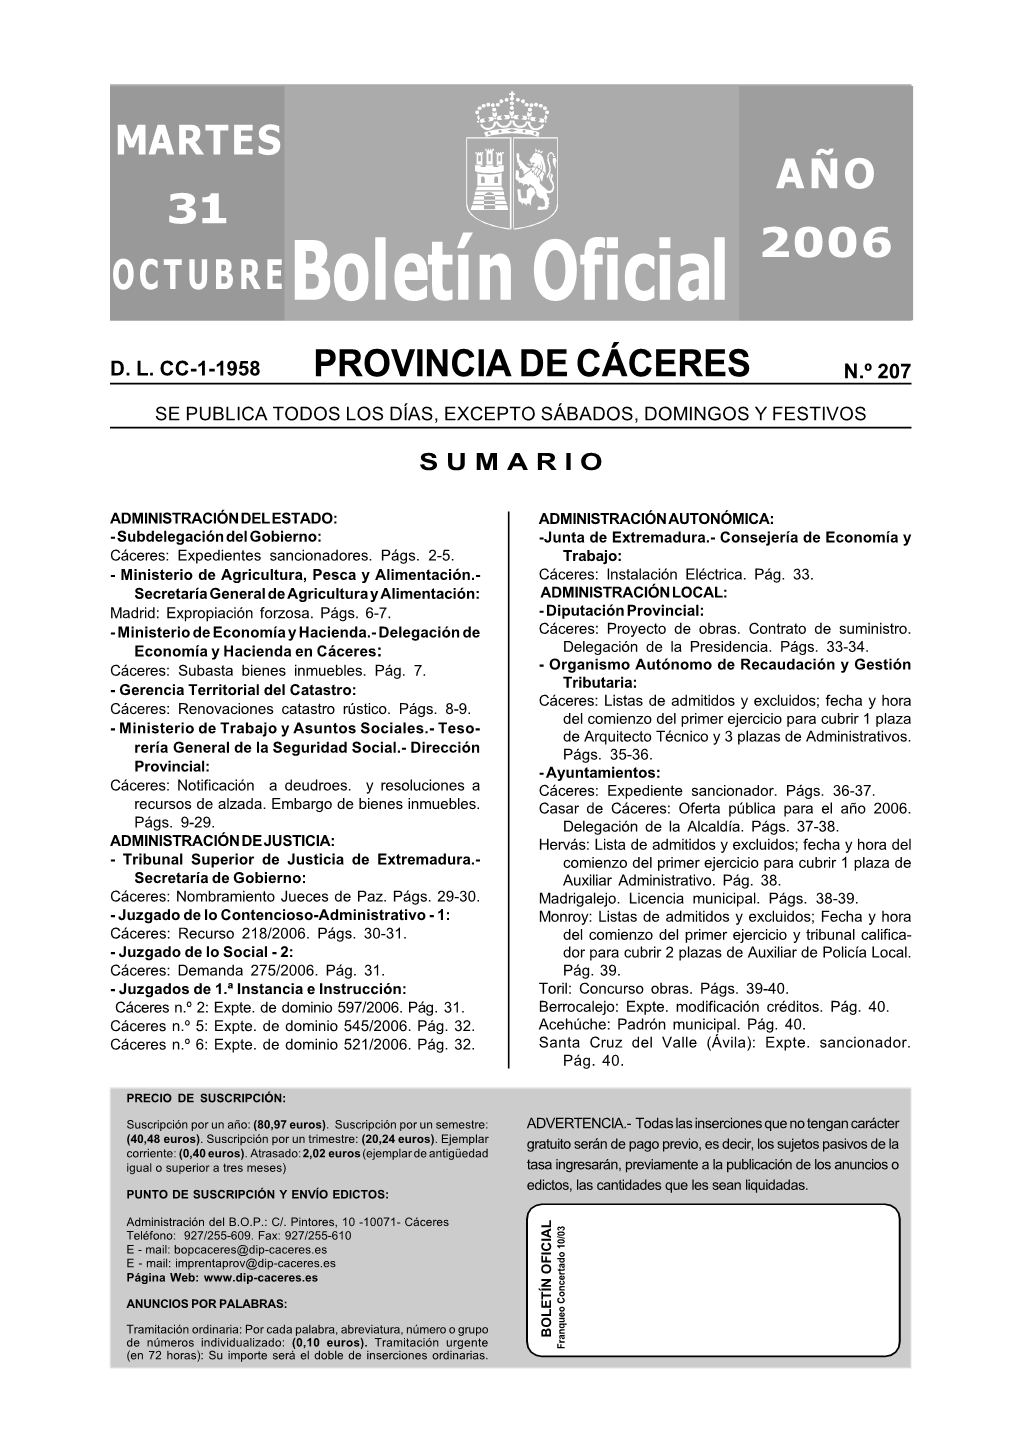 Boletín Oficial MARTES AÑO 2006